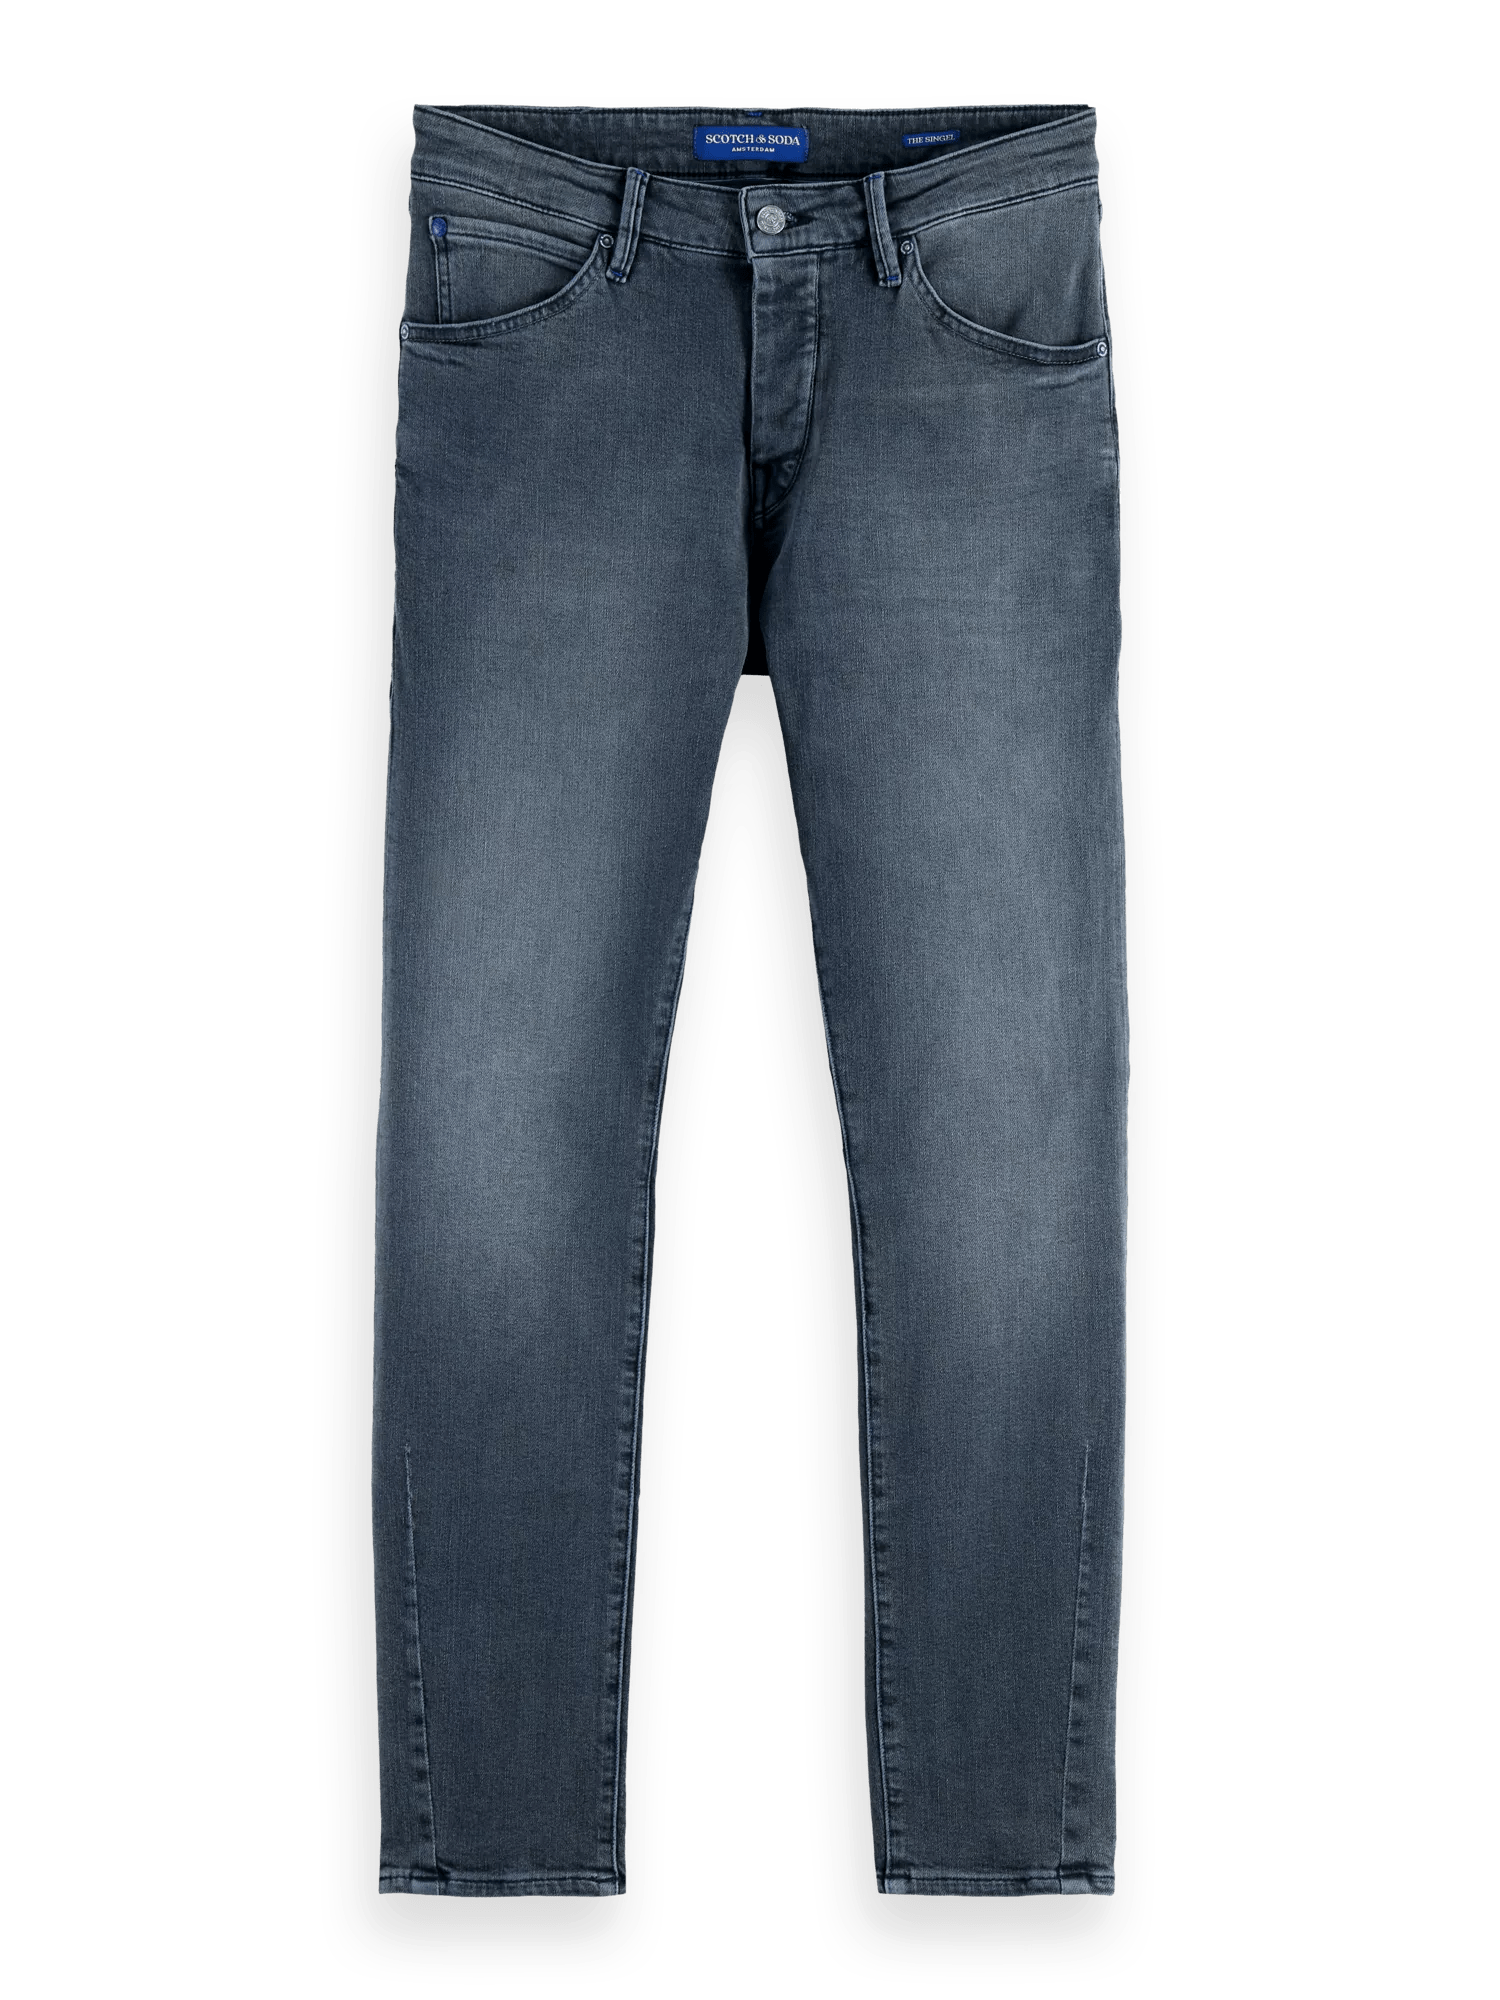 Scotch & Soda The Singel Slim Tapered Fit Jeans – Dusk Trek FNT